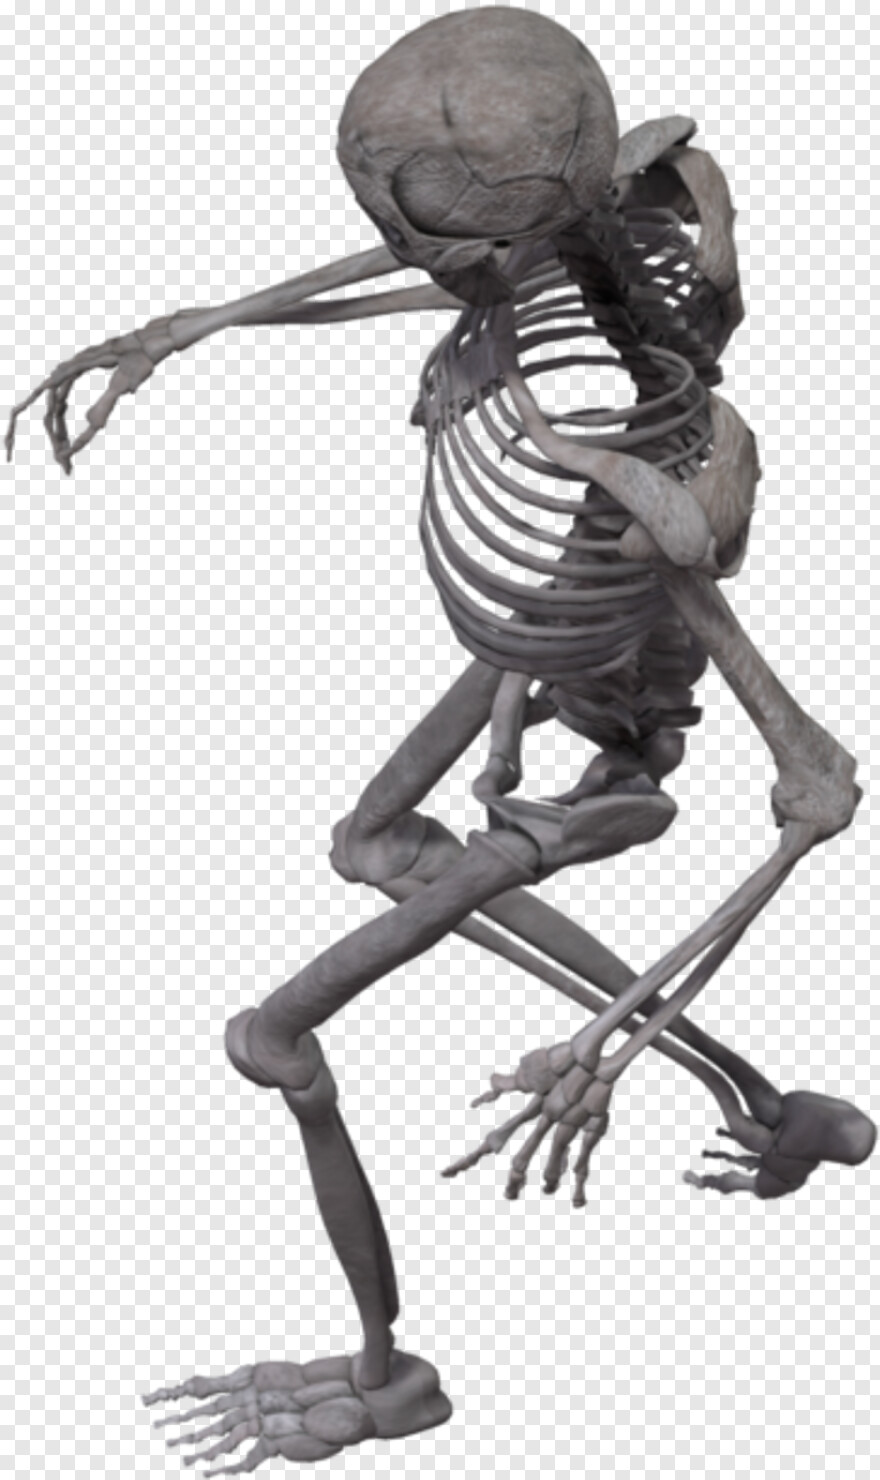  Skeleton Head, Skeleton, Skeleton Hand, Skeleton Key, Skeleton Arm, Strong Arm